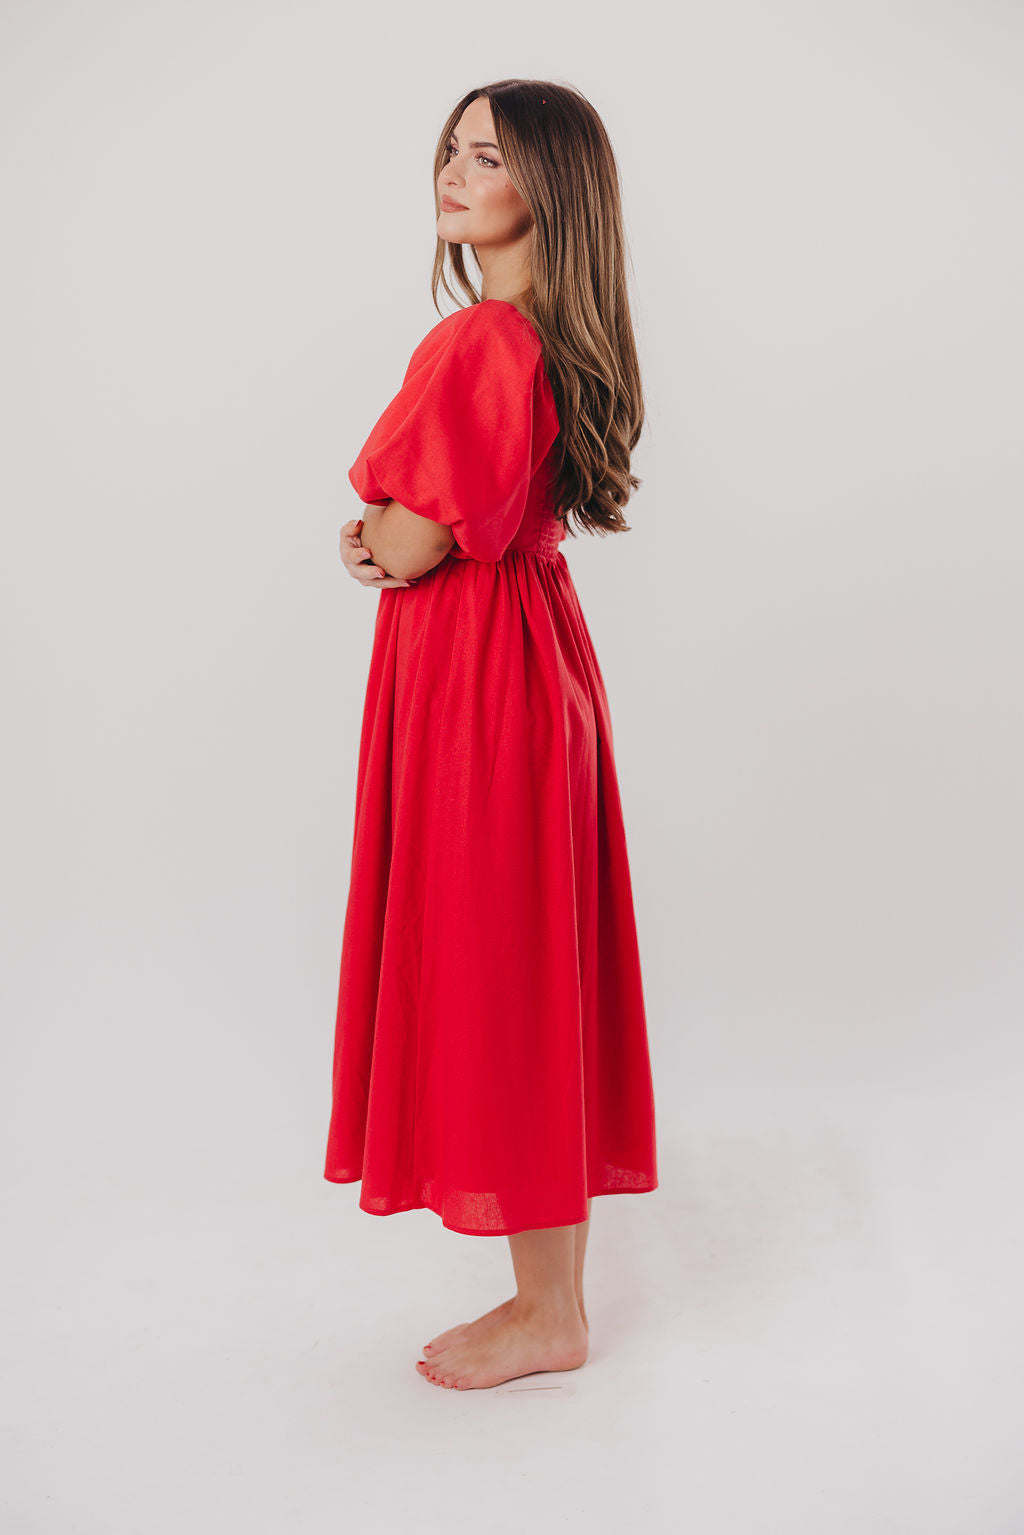 Hamilton Midi Dress in Red - Bump Friendly (S-XL)